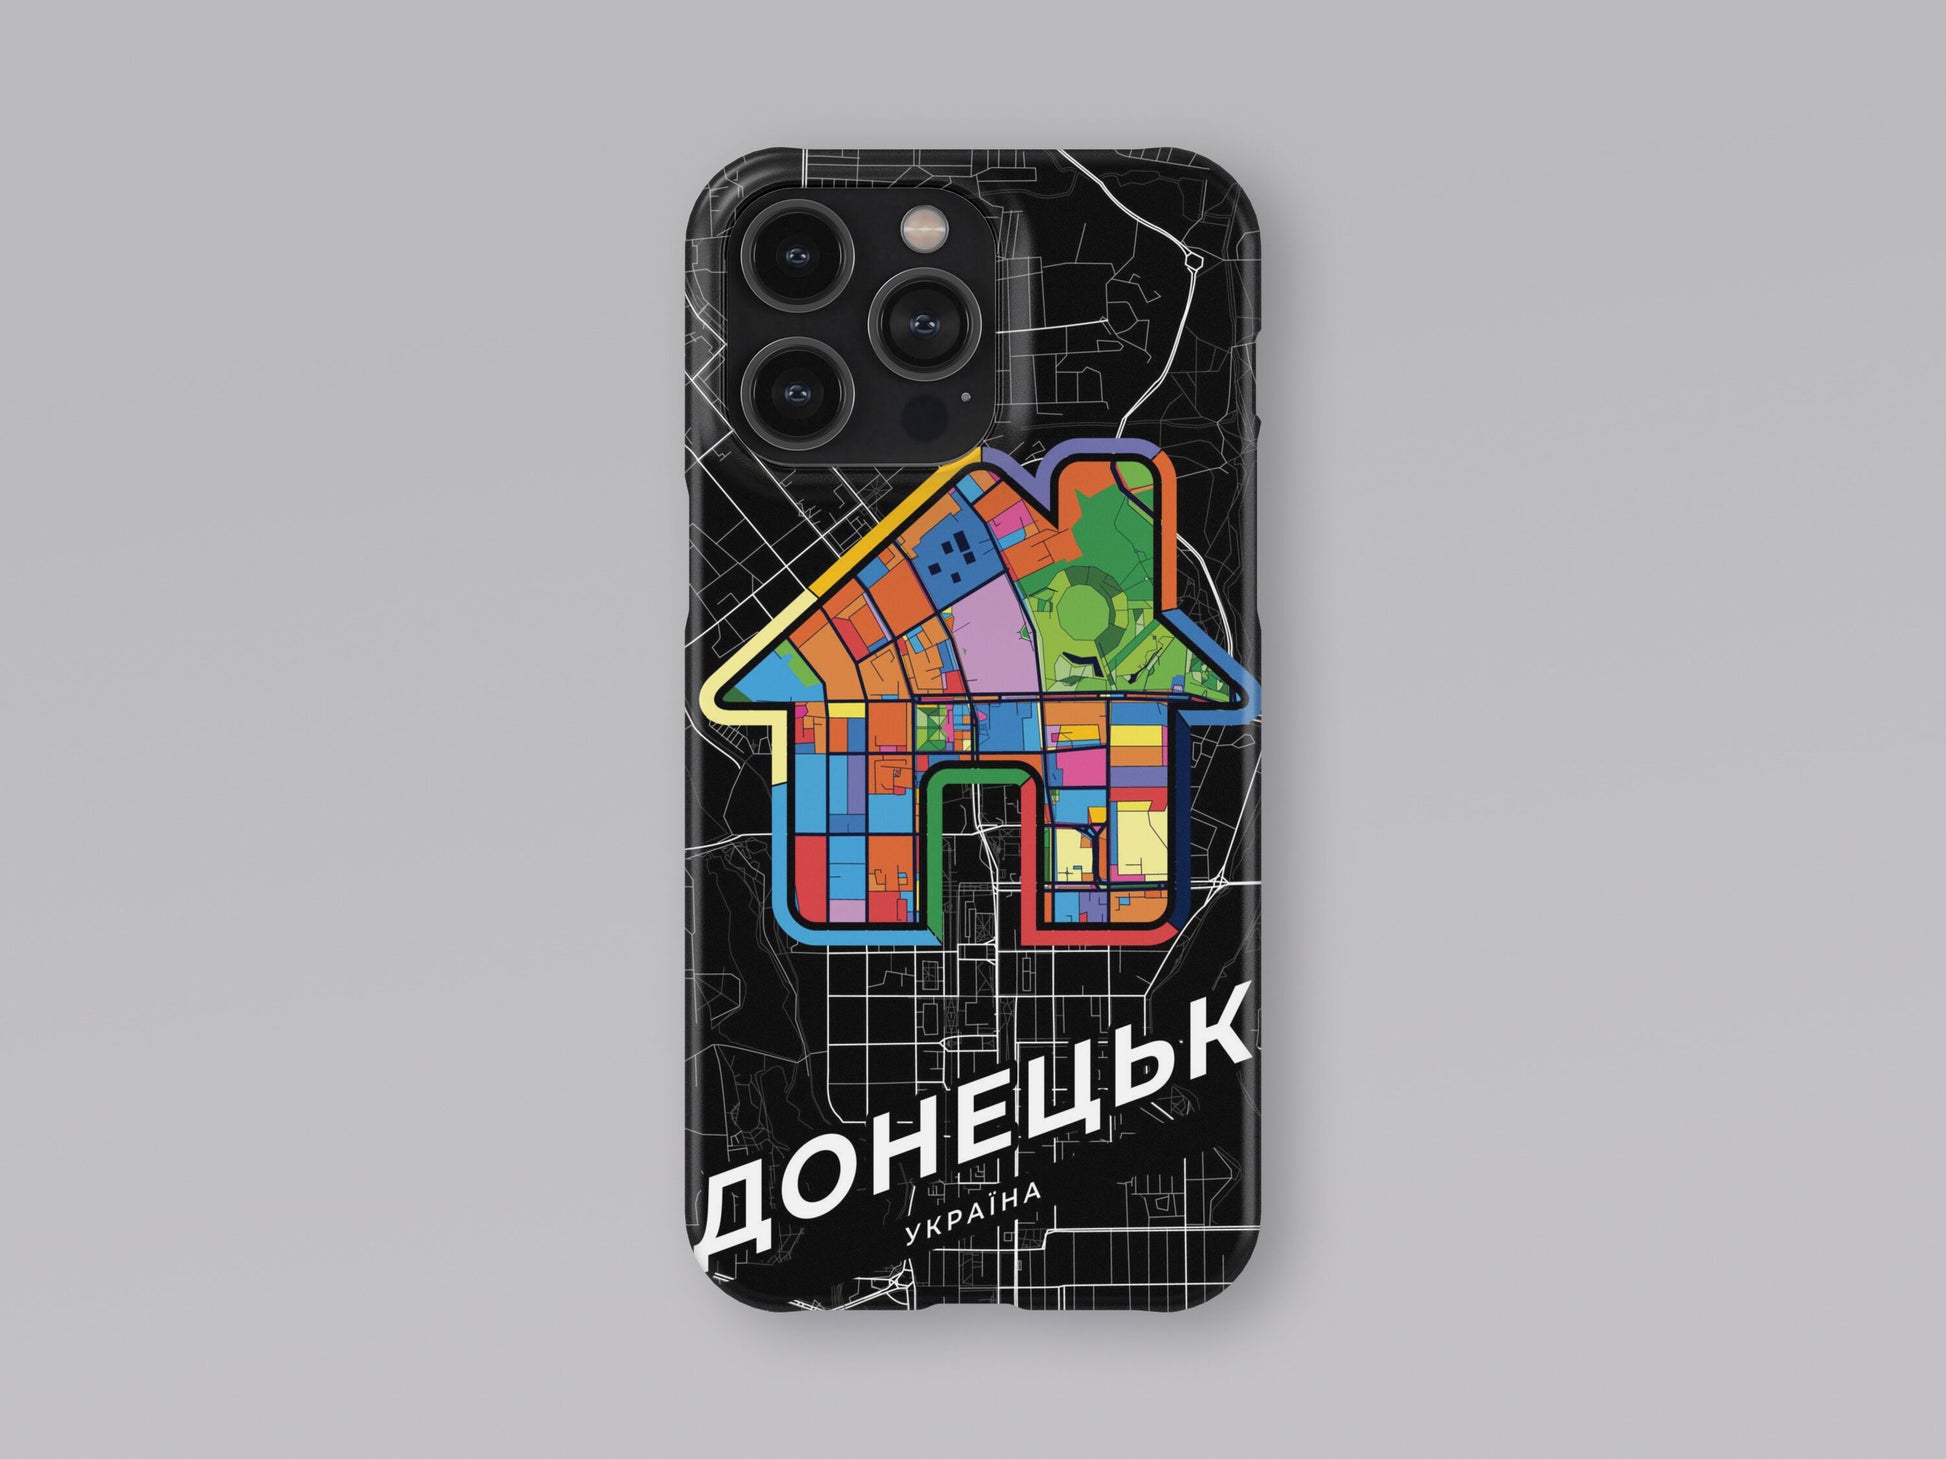 Donetsk Ukraine slim phone case with colorful icon. Birthday, wedding or housewarming gift. Couple match cases. 3